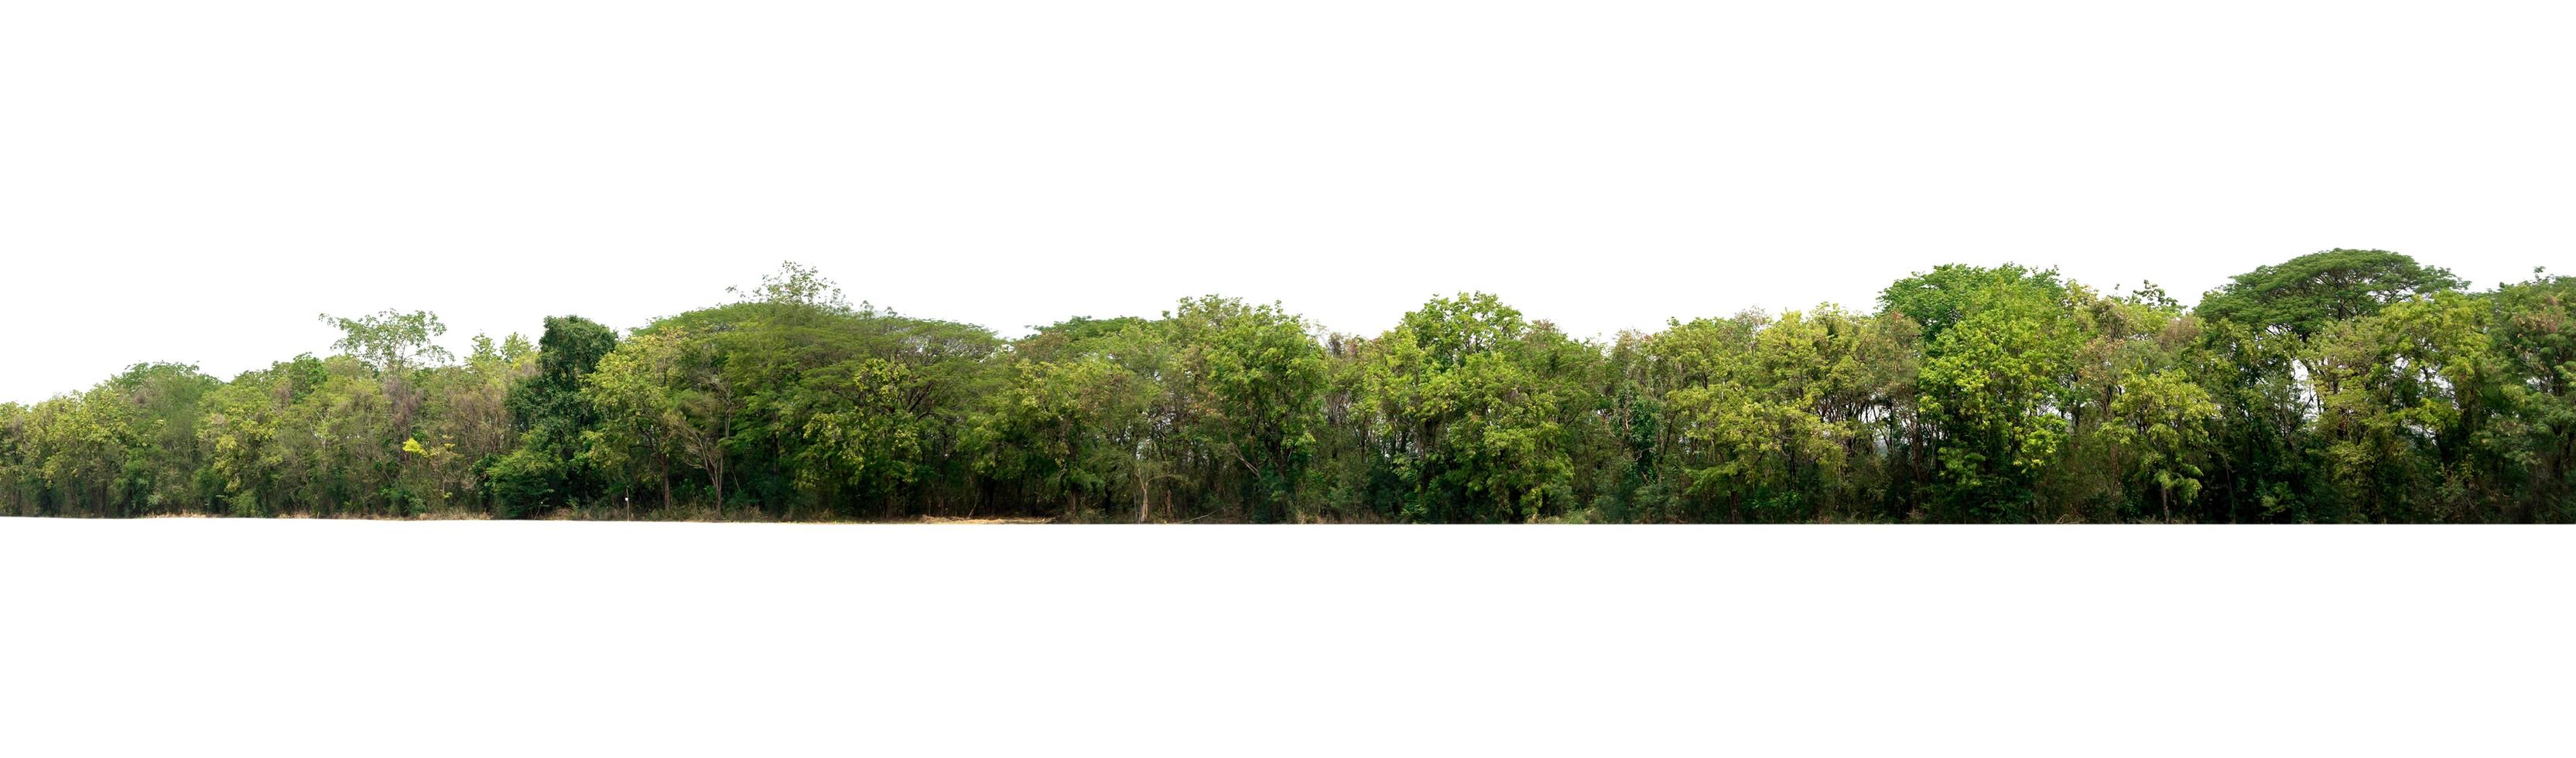 paisaje árbol aislar en blanco antecedentes foto